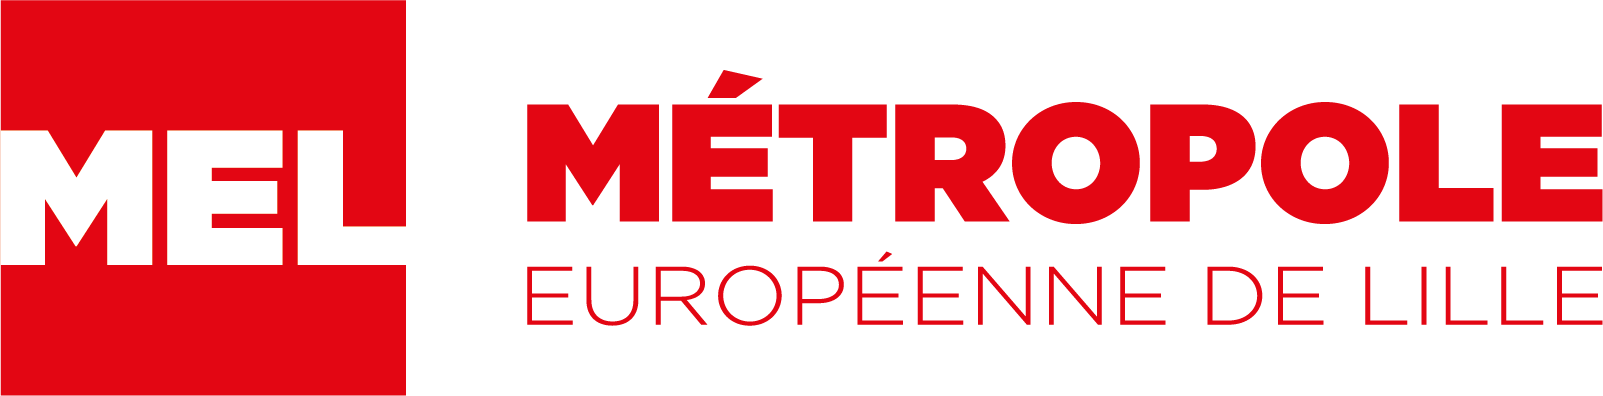 Lille European Metropolis - Home Page